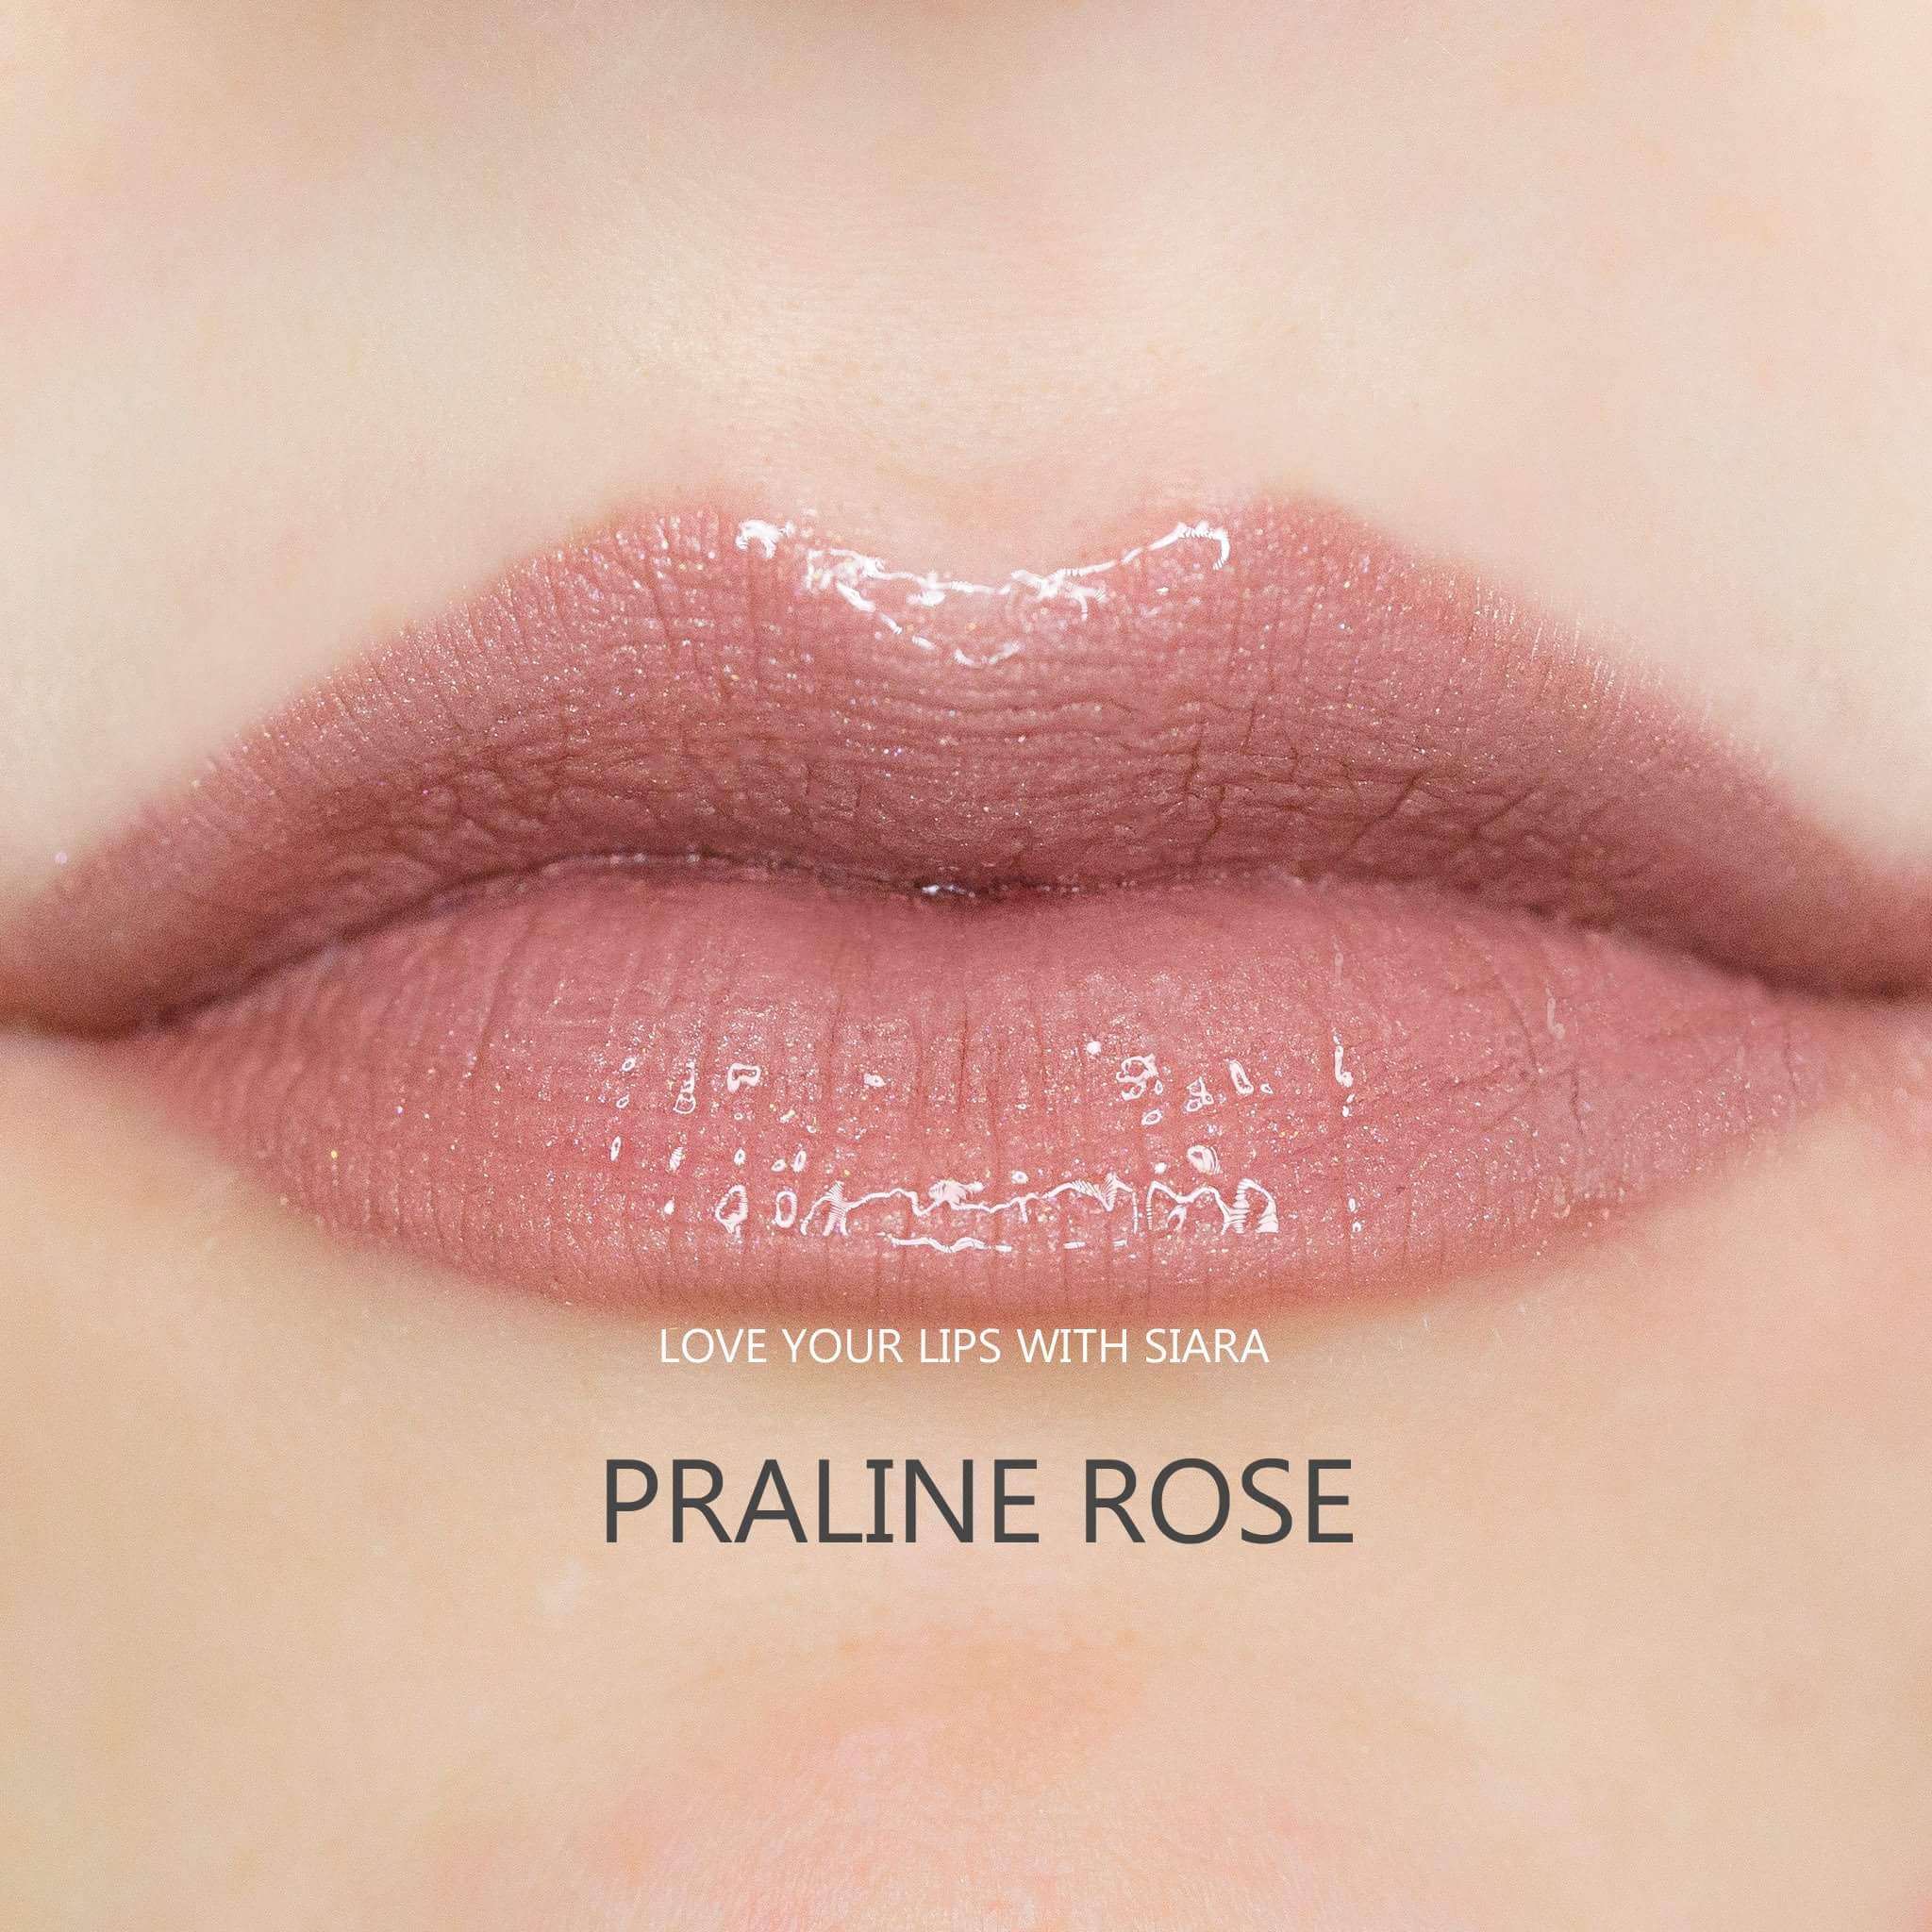 PRALINE ROSE - LipSense